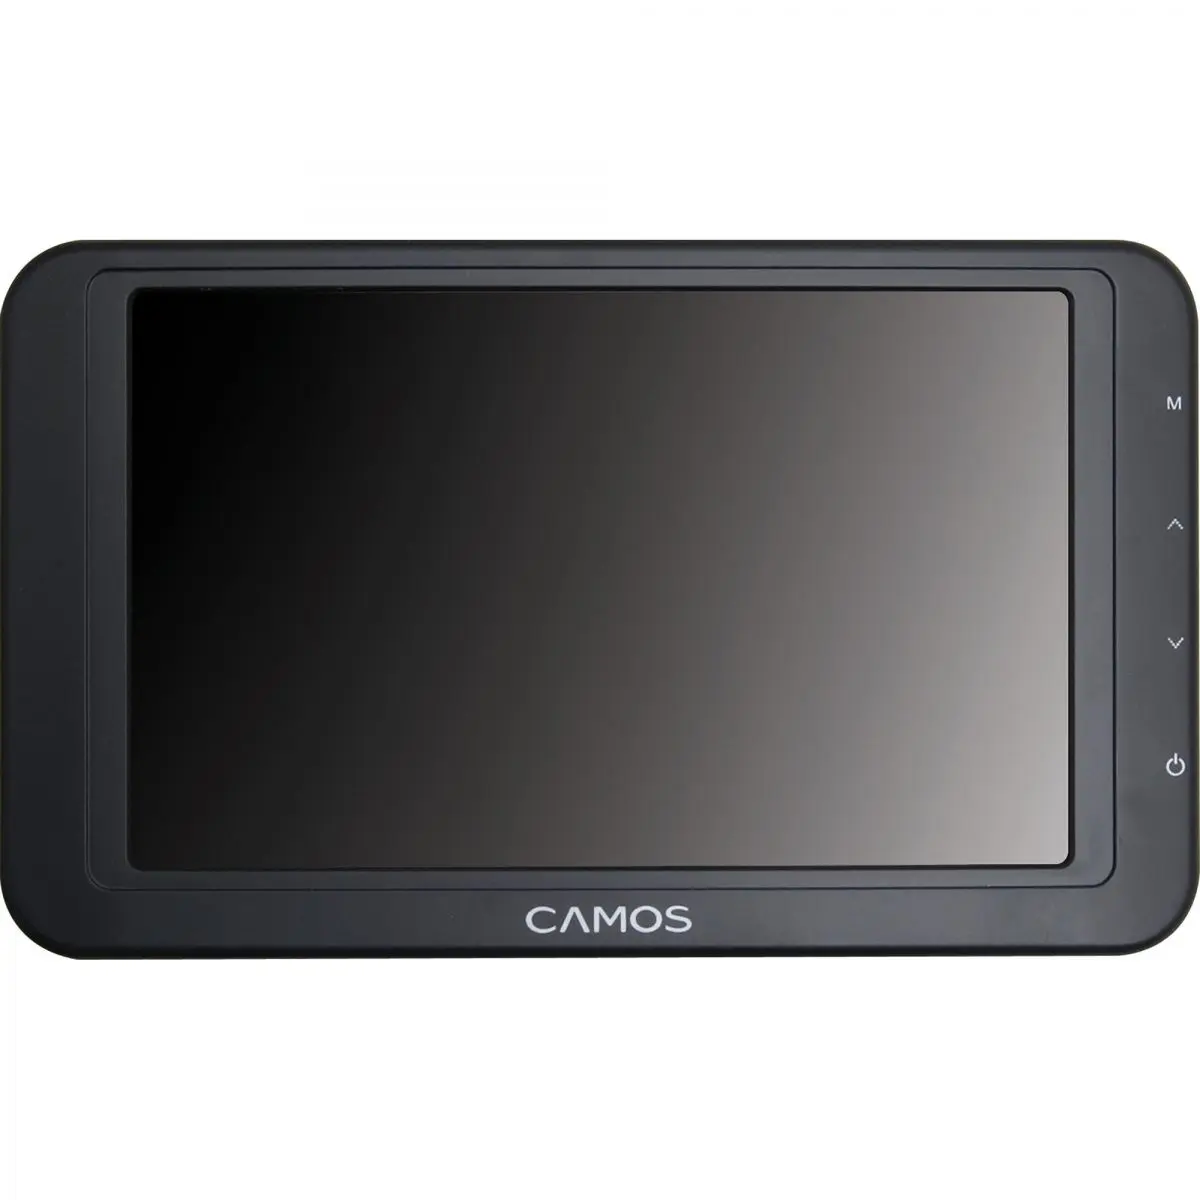 Sistem video invers Camos TV-510